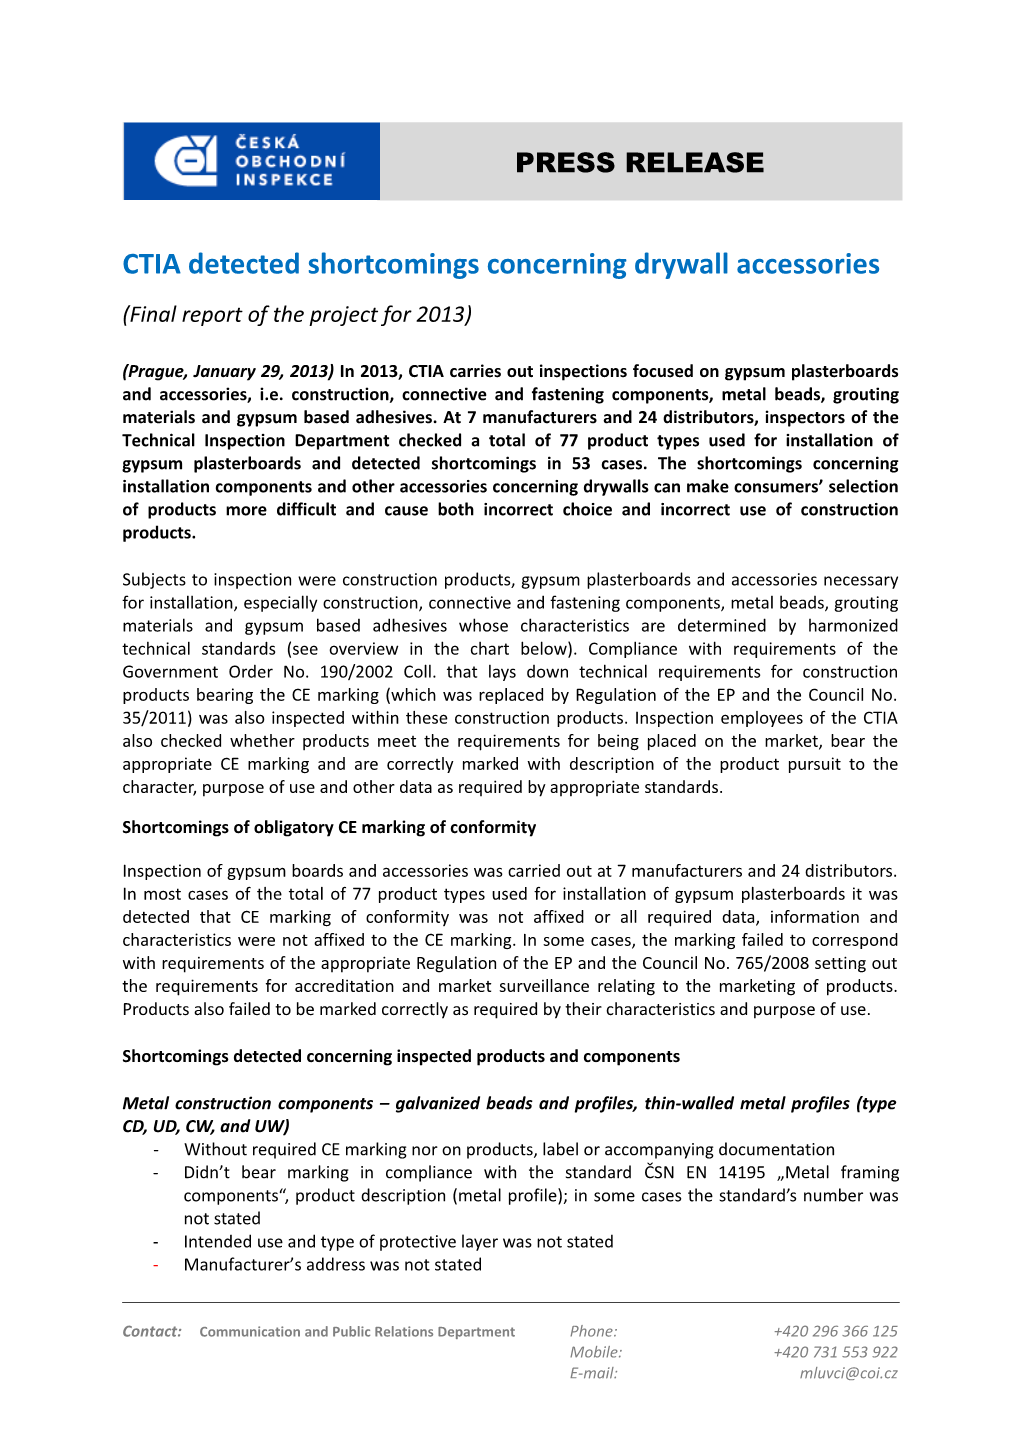 CTIA Detected Shortcomings Concerningdrywall Accessories